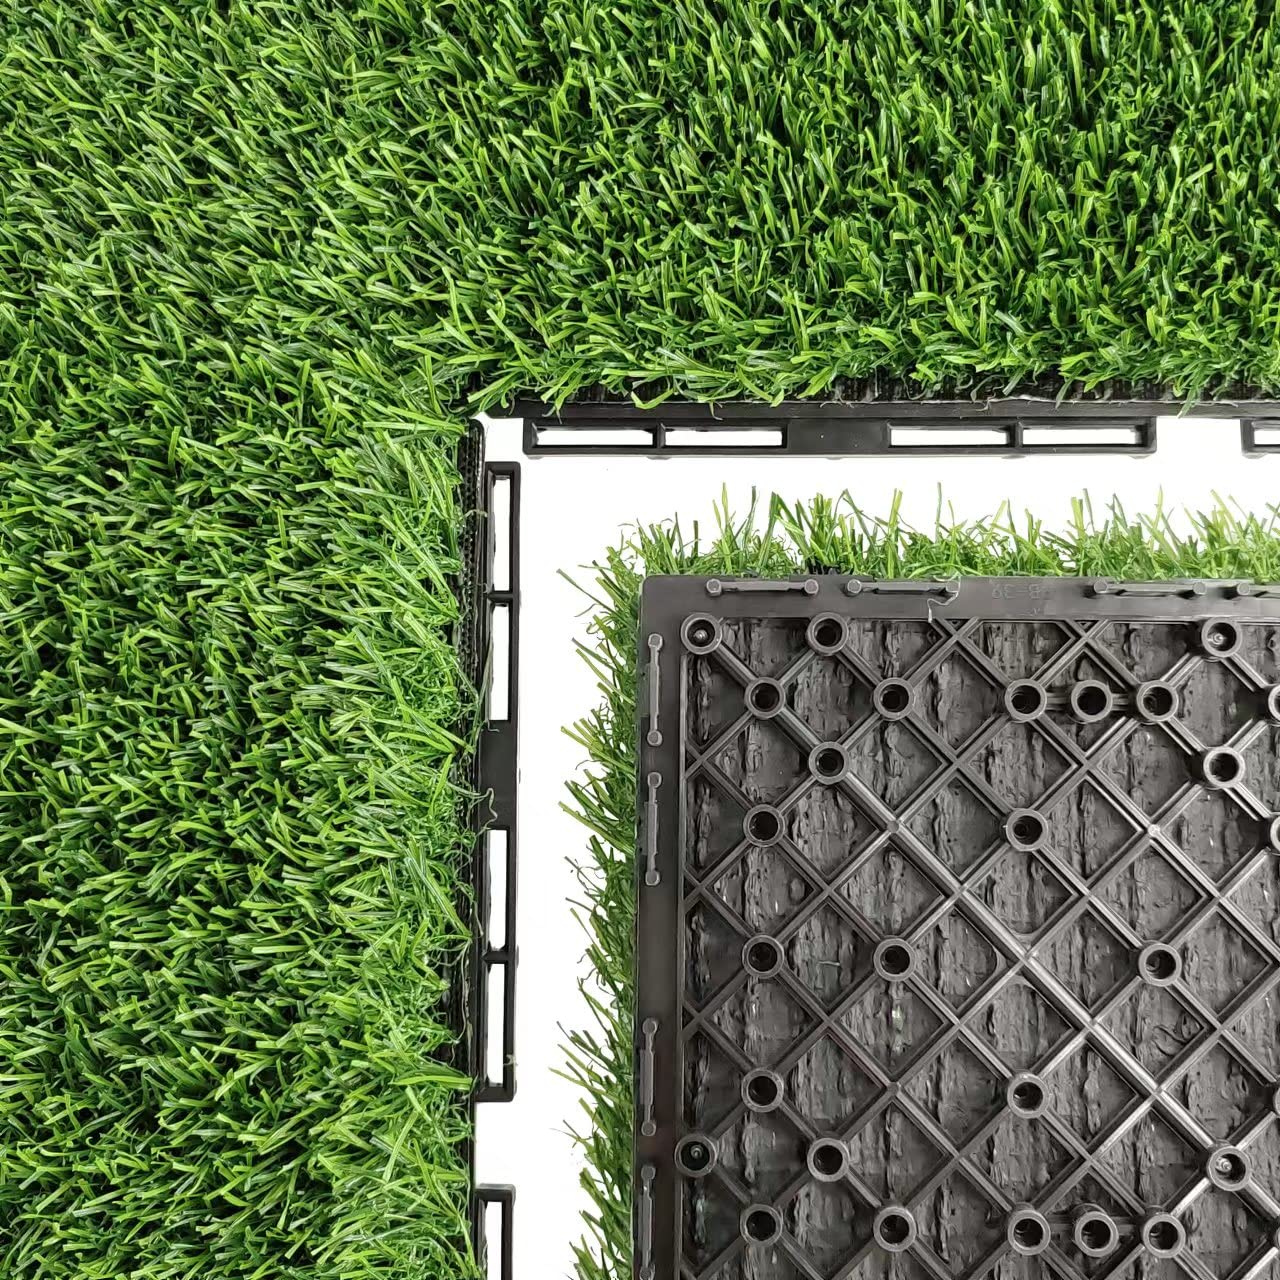 Plantex Tiles for Floor-High Density Grass Carpet Tiles/Garden Tile/Quick Flooring Solution for Indoor/Outdoor Deck Tile-Pack of 10 (1:1 Sq.Feet,APS-1213)